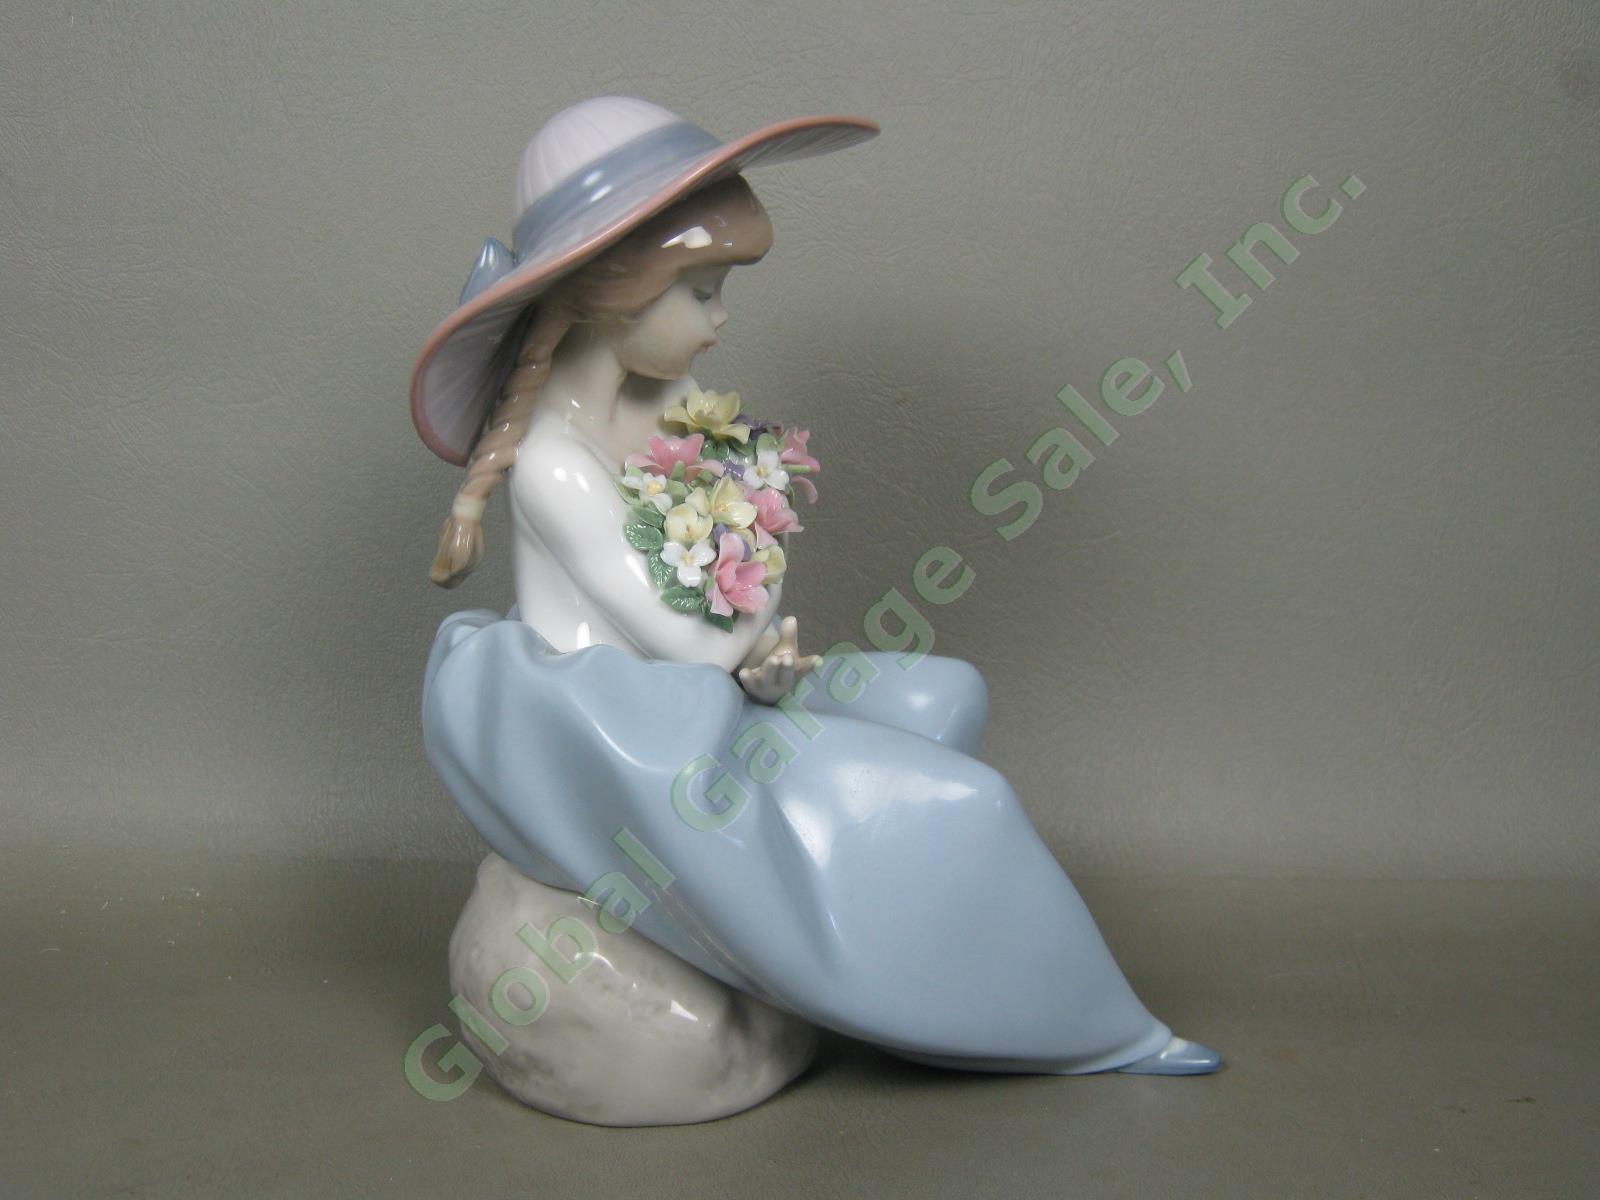 Vtg 1990 Lladro Figurine Fragrant Bouquet #5862 Girl w/ Flowers Mint In Box! NR! 3